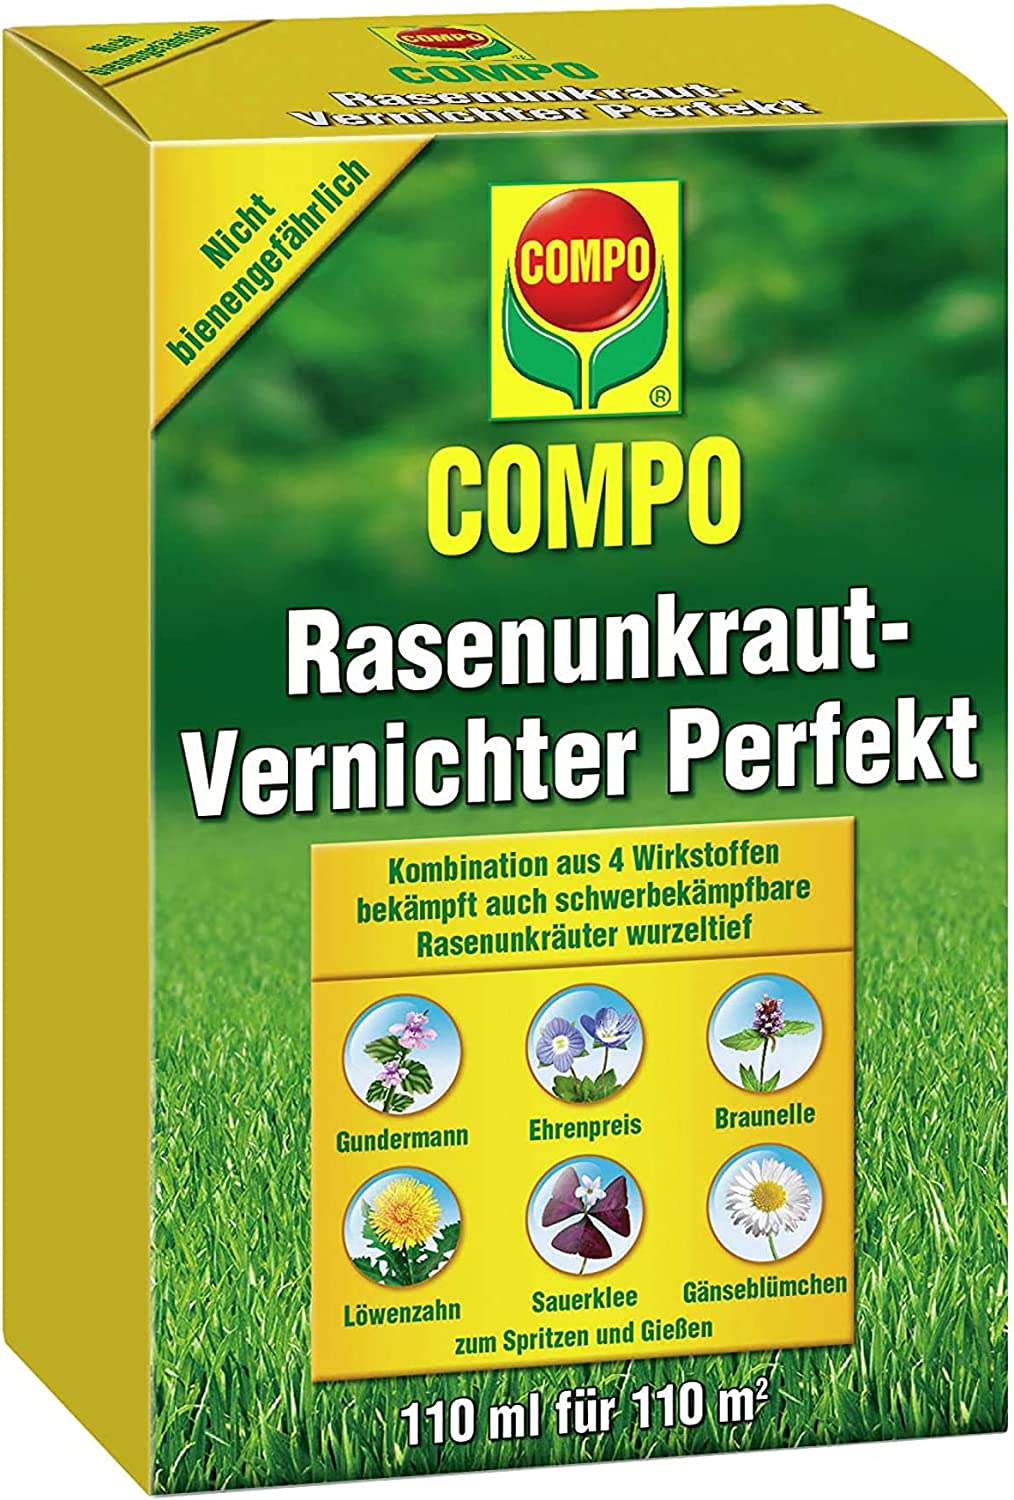 COMPO Rasenunkraut-Vernichter Perfekt 110 ml für 110 m² 